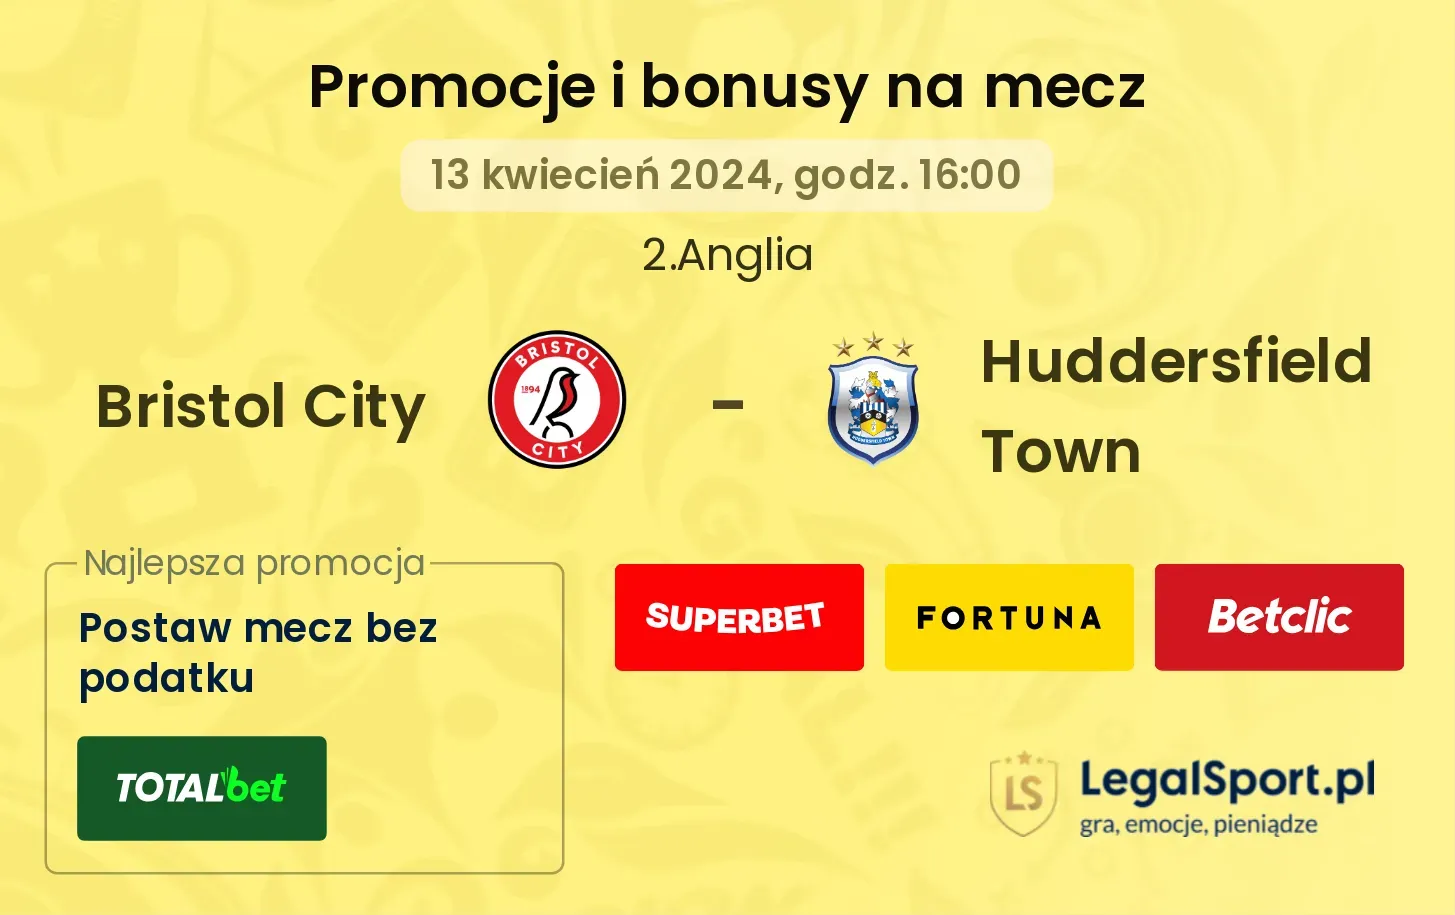 Bristol City - Huddersfield Town promocje bonusy na mecz